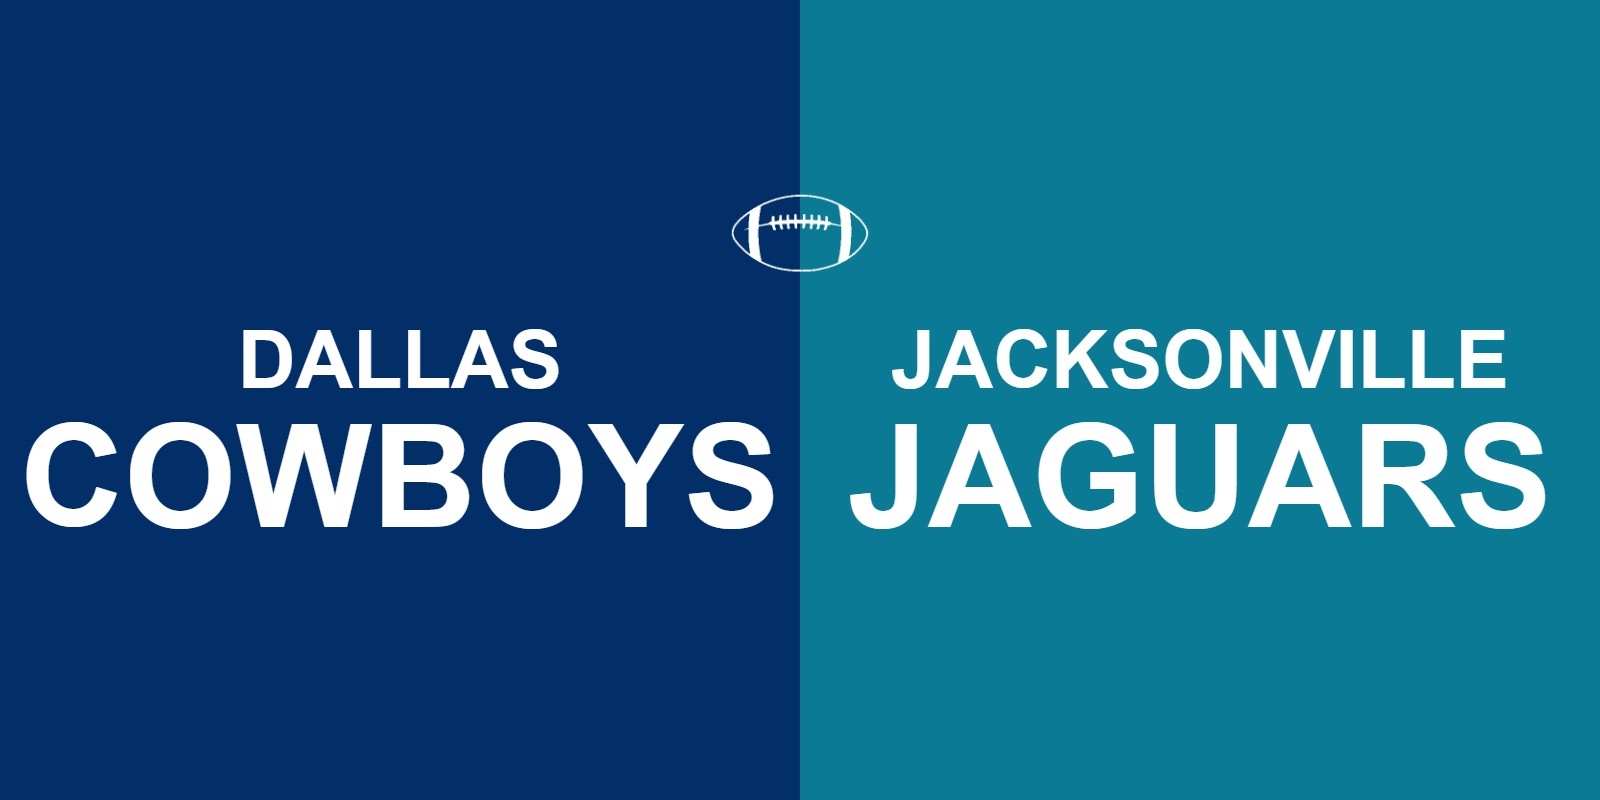 Cowboys vs Jaguars